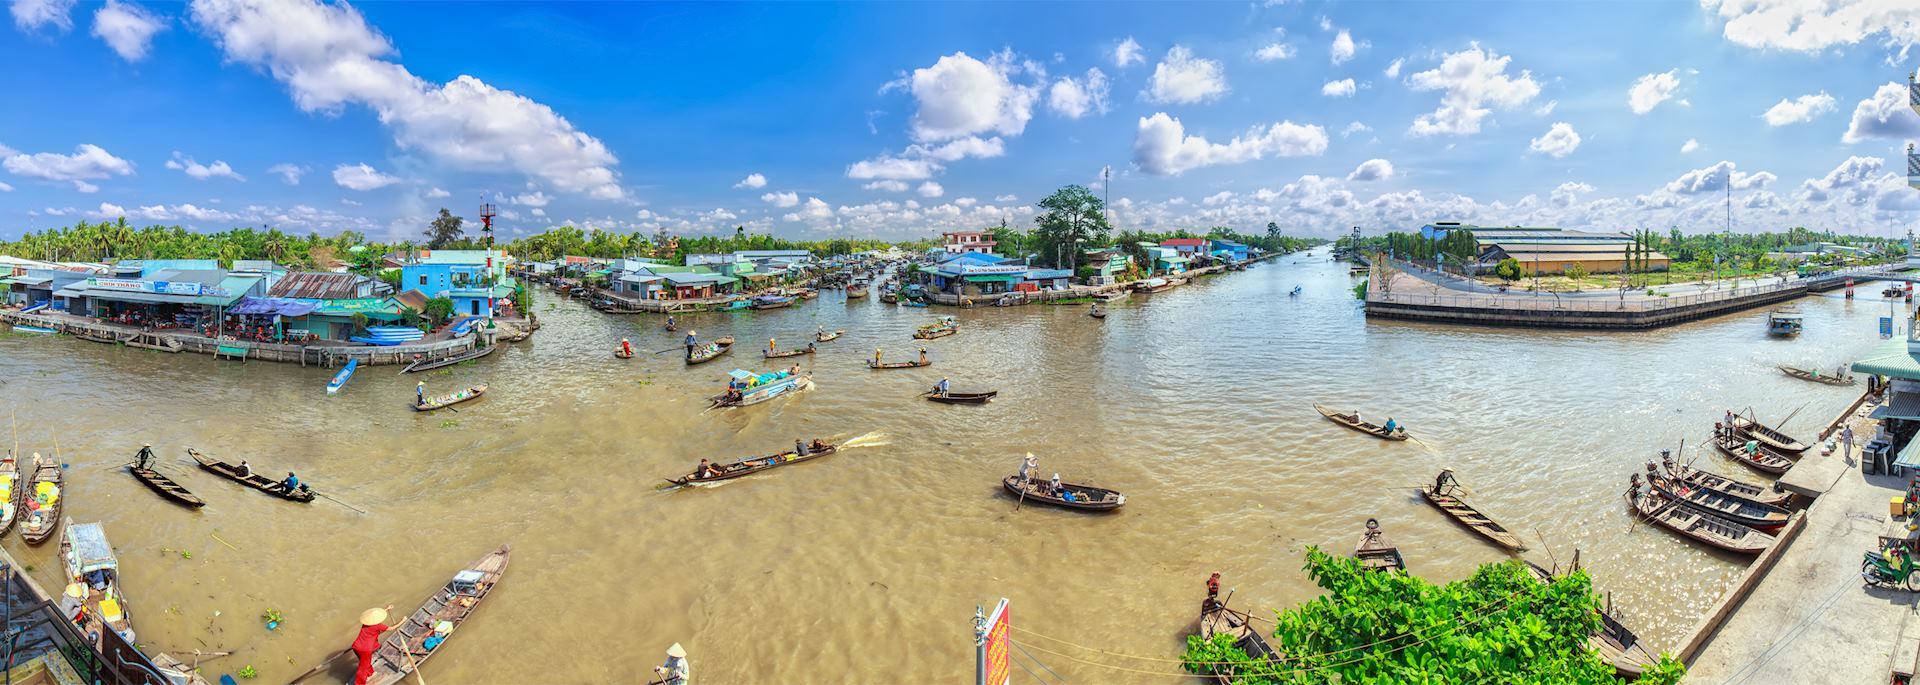 Floating market on the Mekong Delta, Vietnam